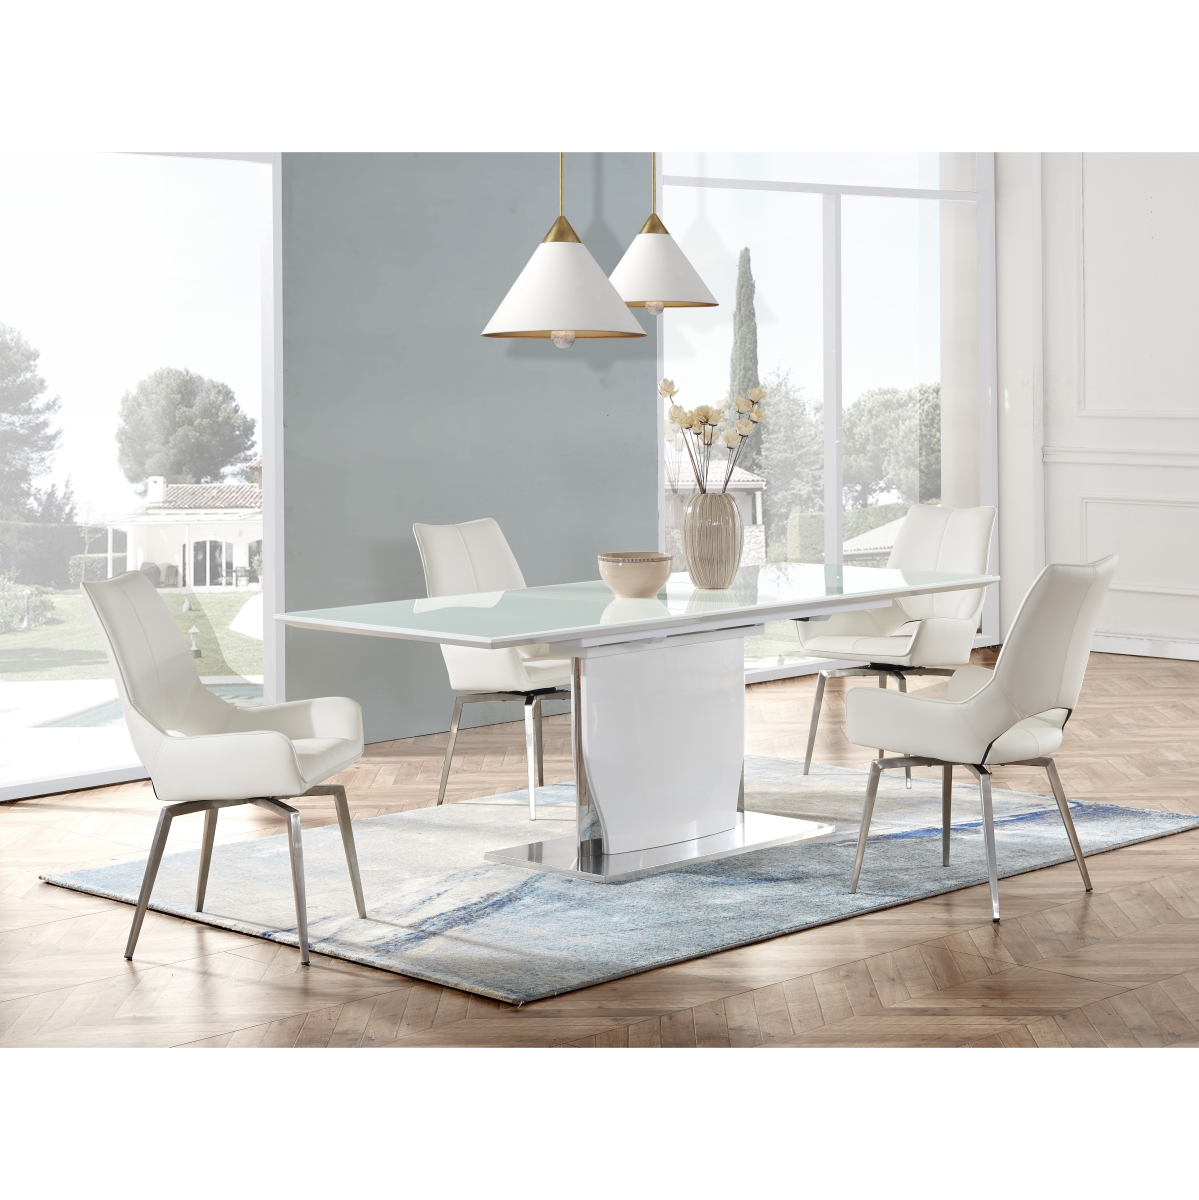 D2279DTPlusD4878DC-BLK Enjoy Silver & White Dining Table -  Global Furniture USA, D2279DT+D4878DC-BLK